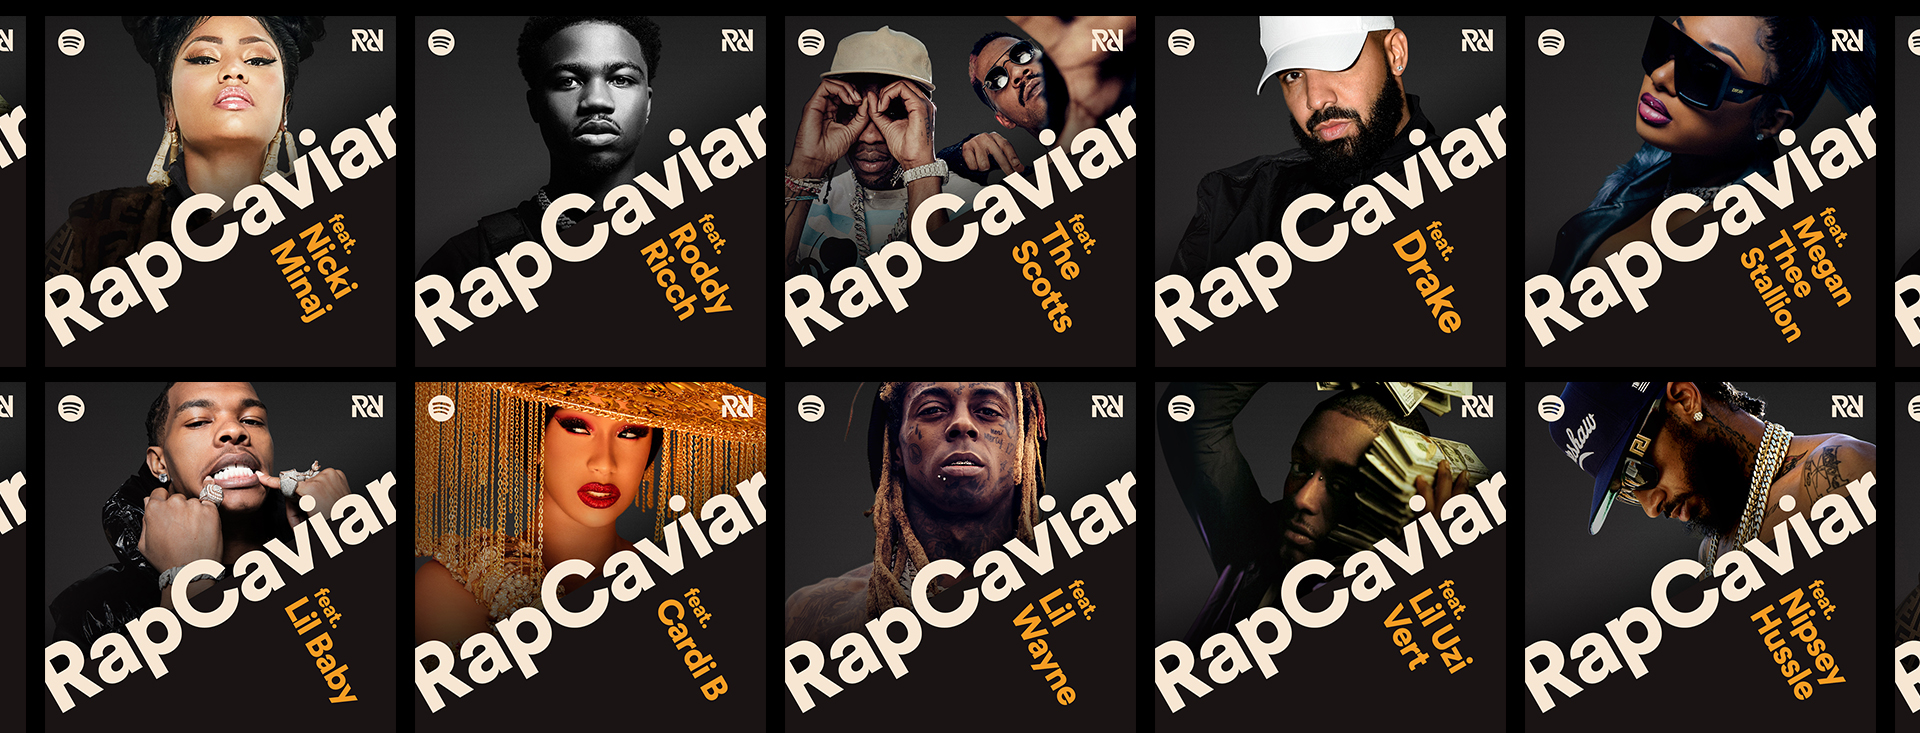 Spotify Playlist RapCaviar celebrates its five year annivery with a quiz